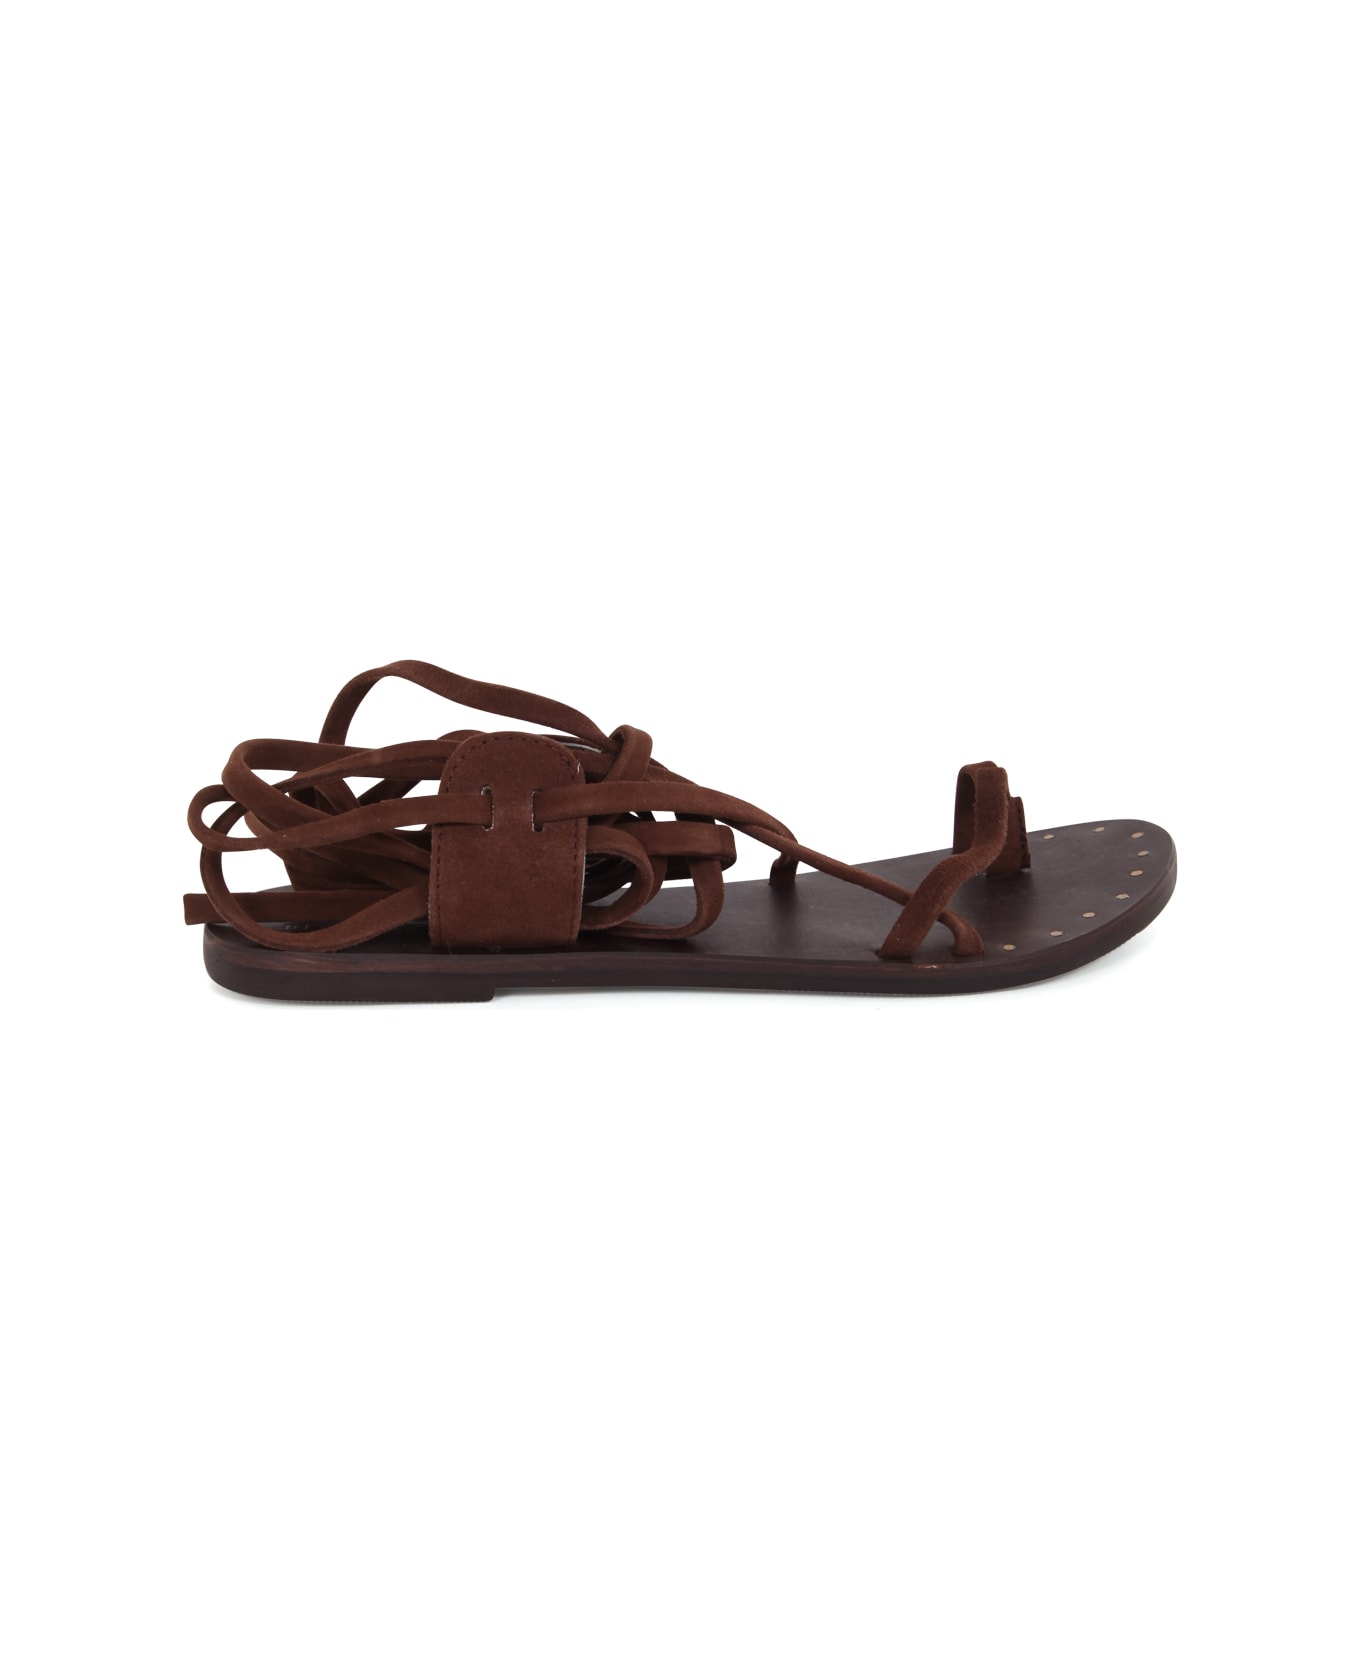 Manebi Tie-up Leather Sandals - Chocolate